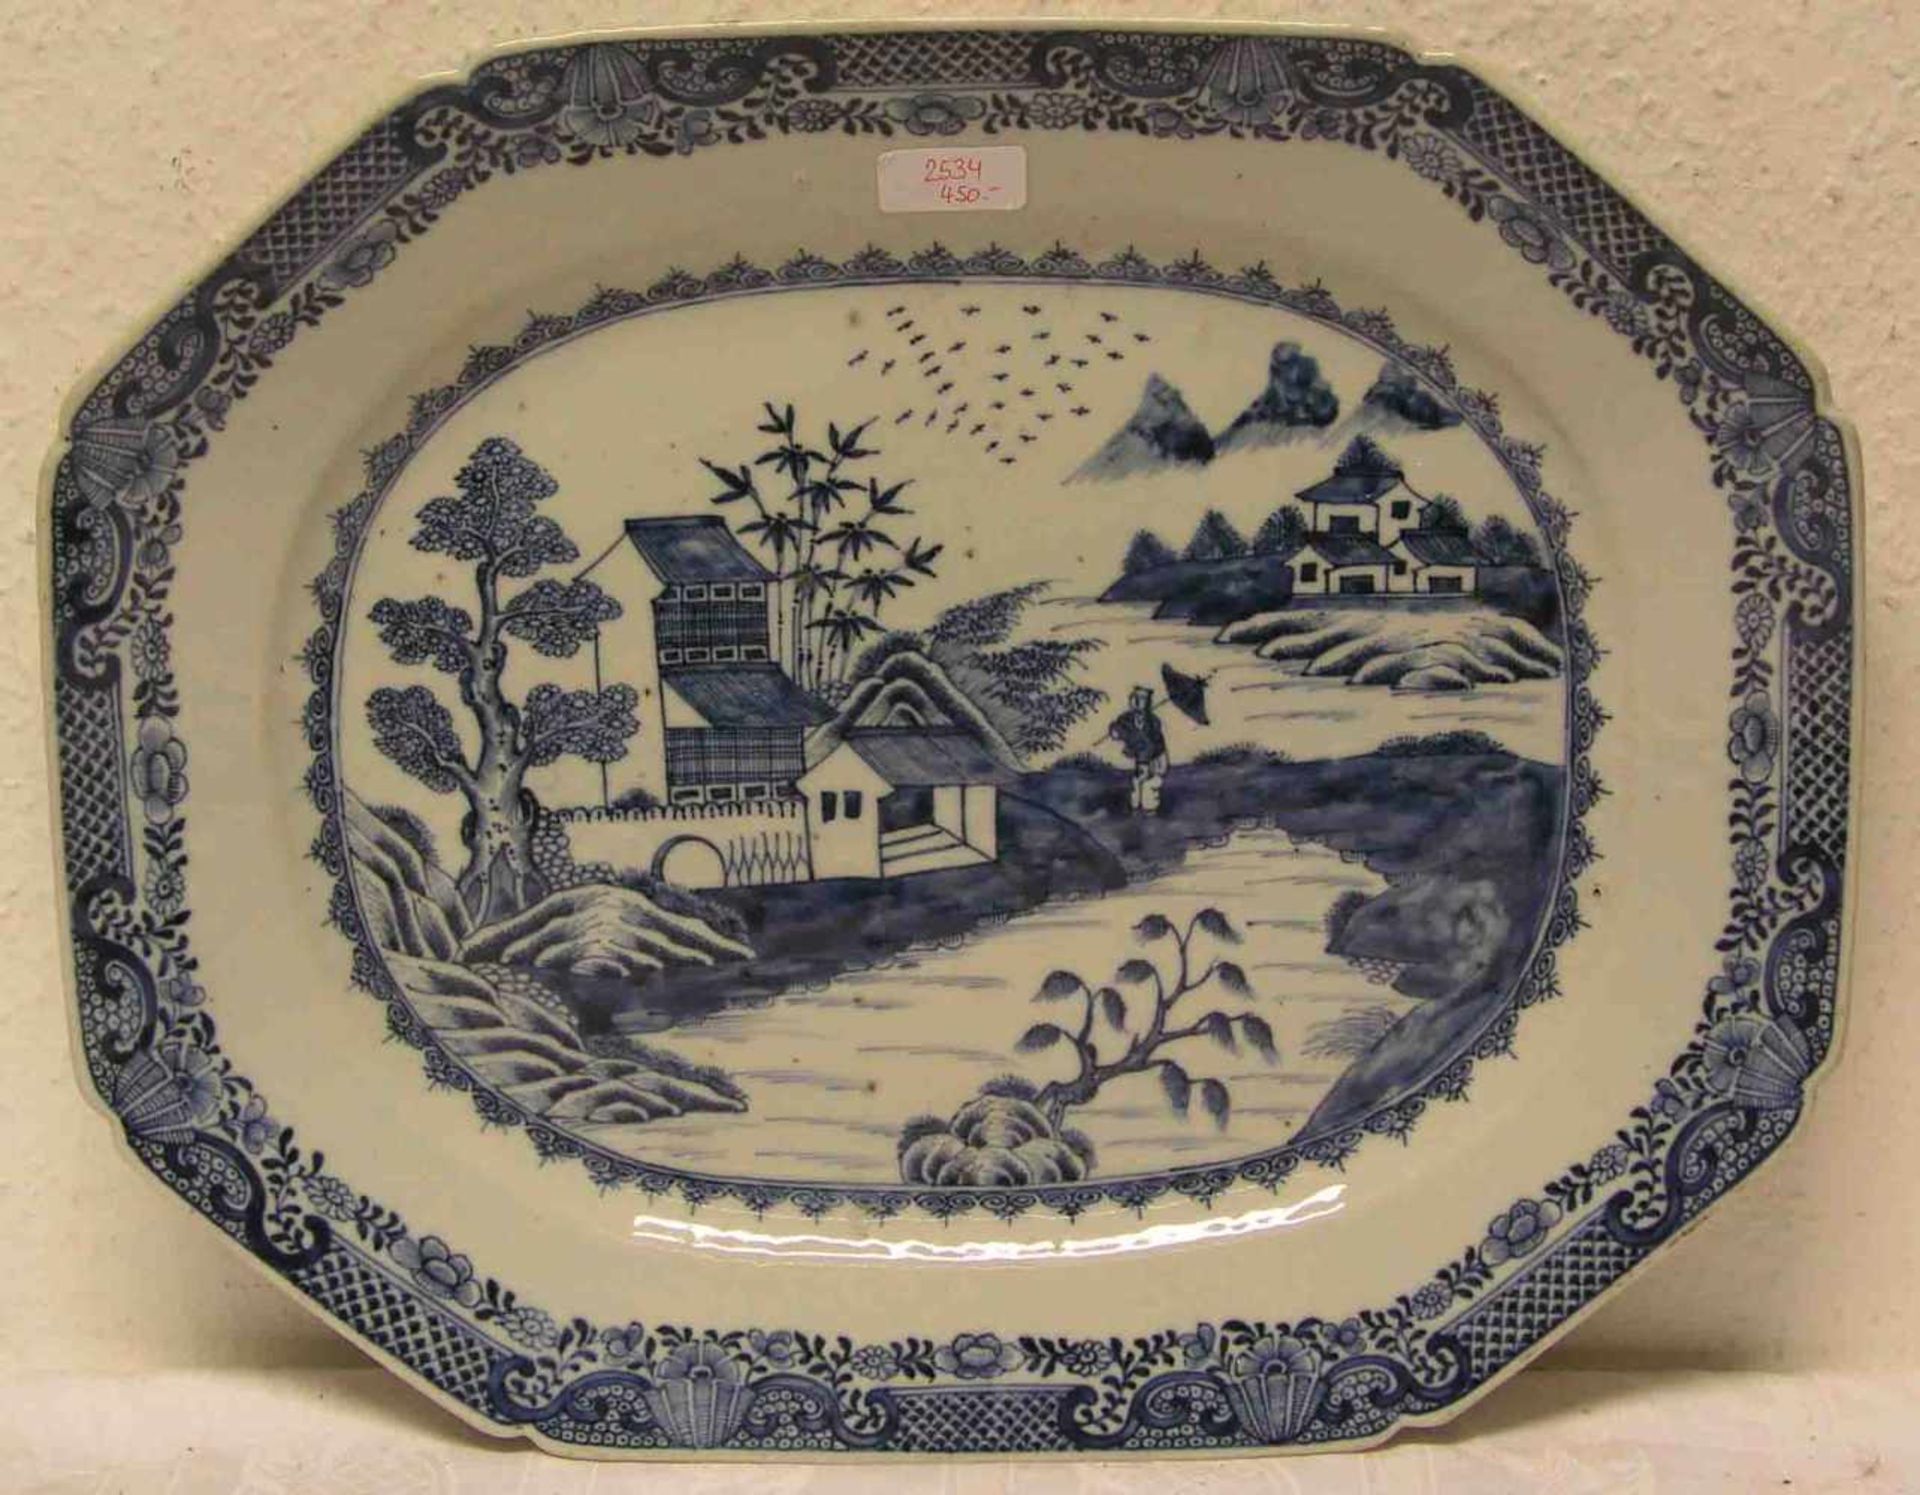 Große Platte. China, Quianlong, 1736 - 1795. Oktogonale Form mit breitem Rand. Im